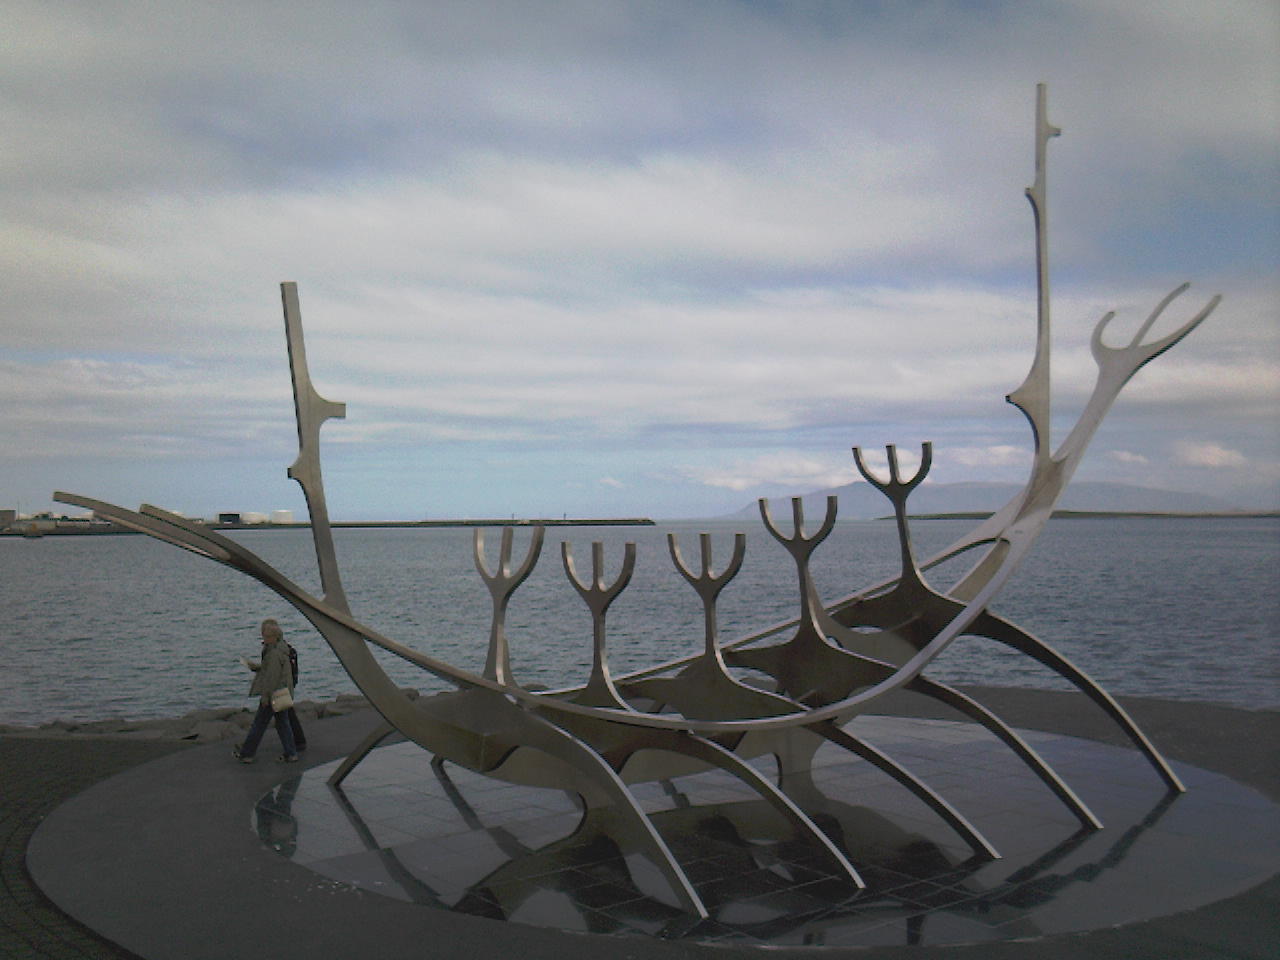 Waterfront sculpture, Reykjavik, Iceland